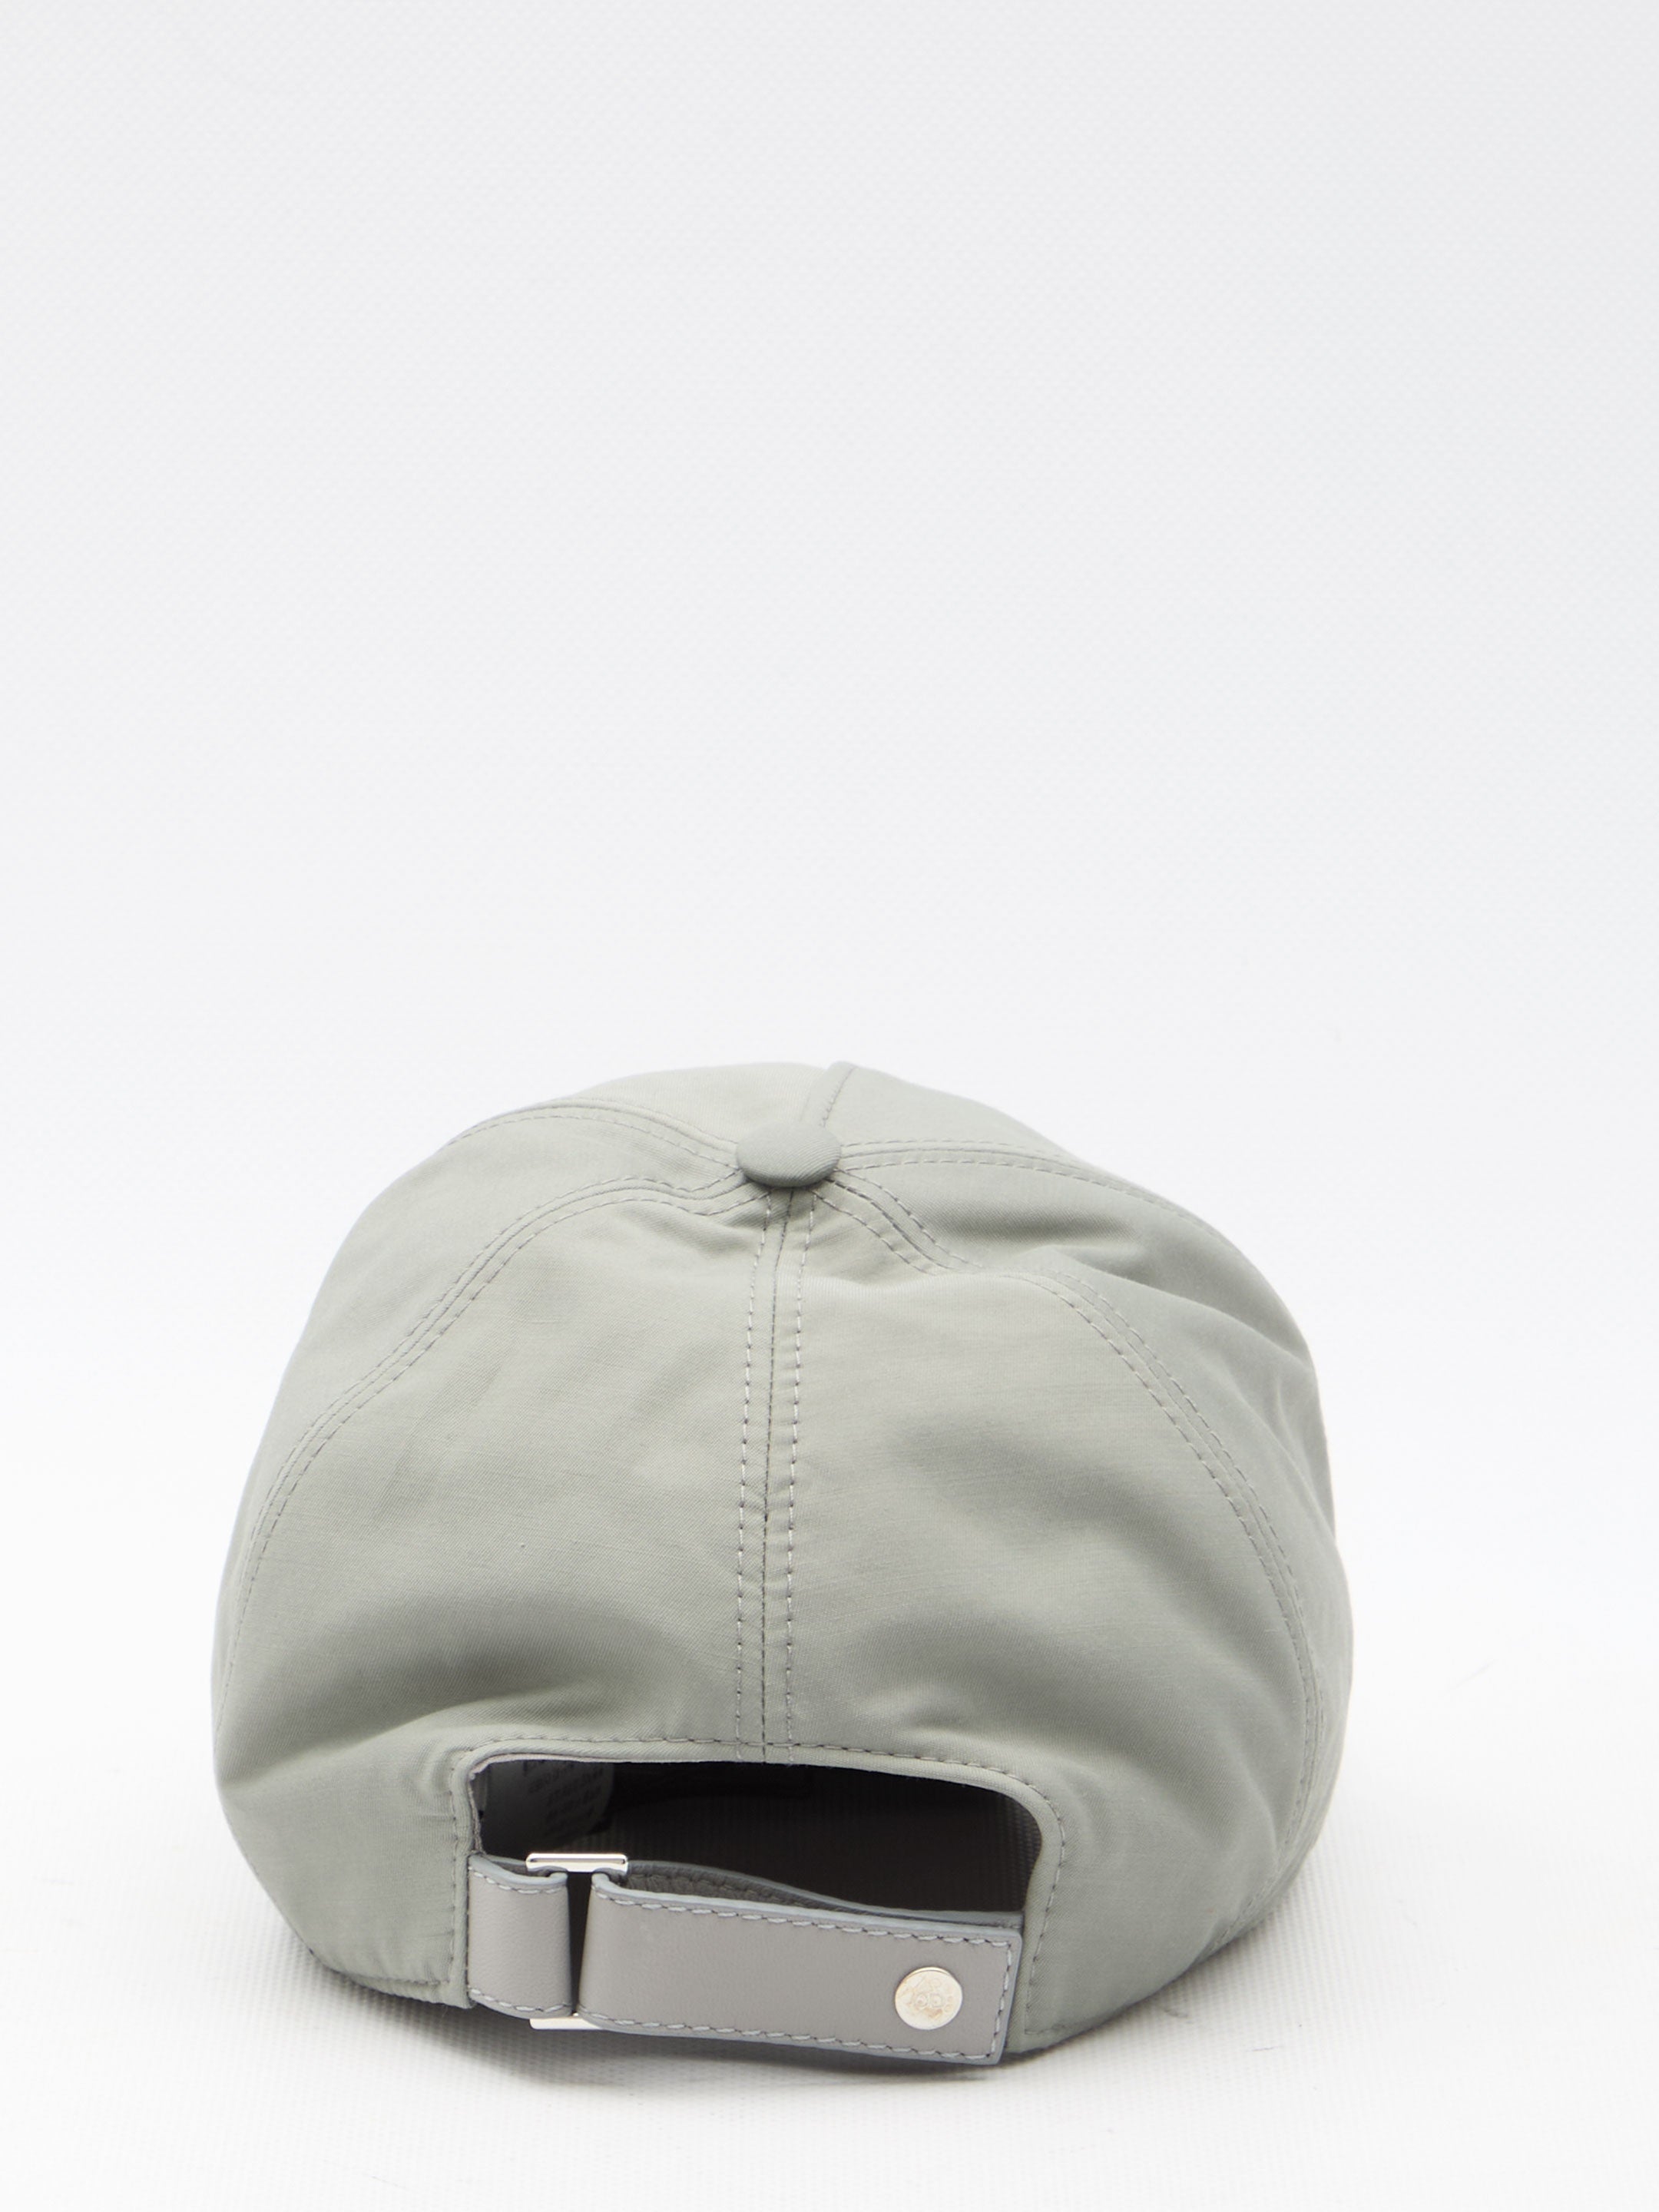 Christian Dior Couture baseball cap